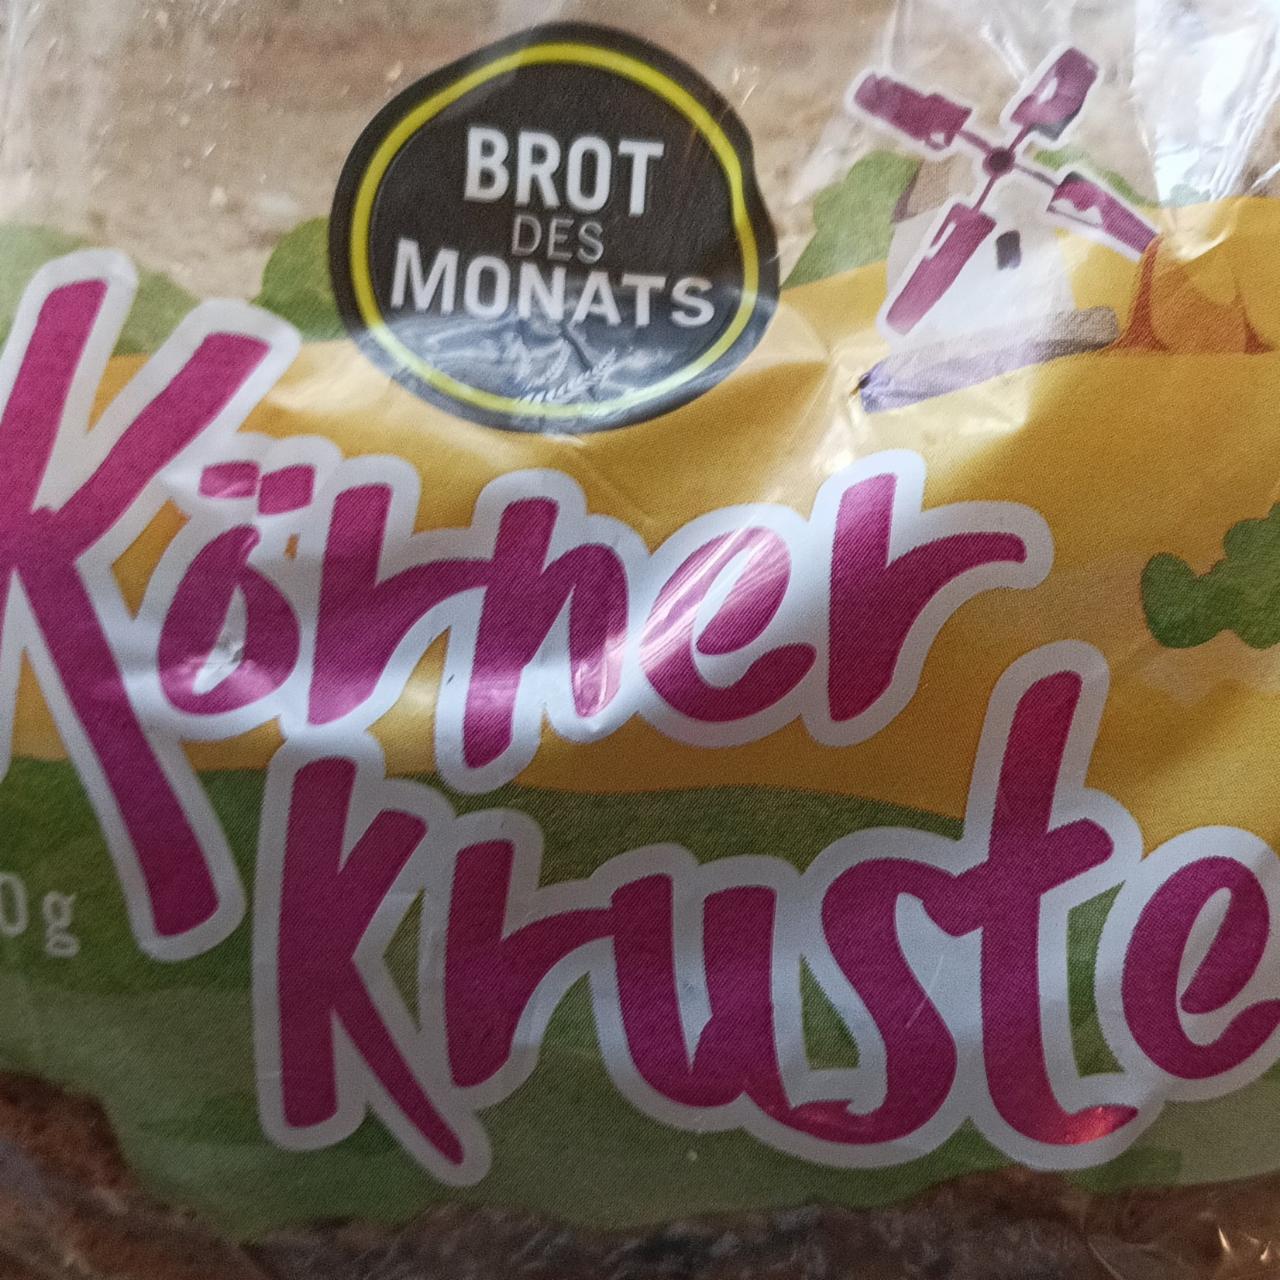 Fotografie - Körner Kruste Brot des Monats